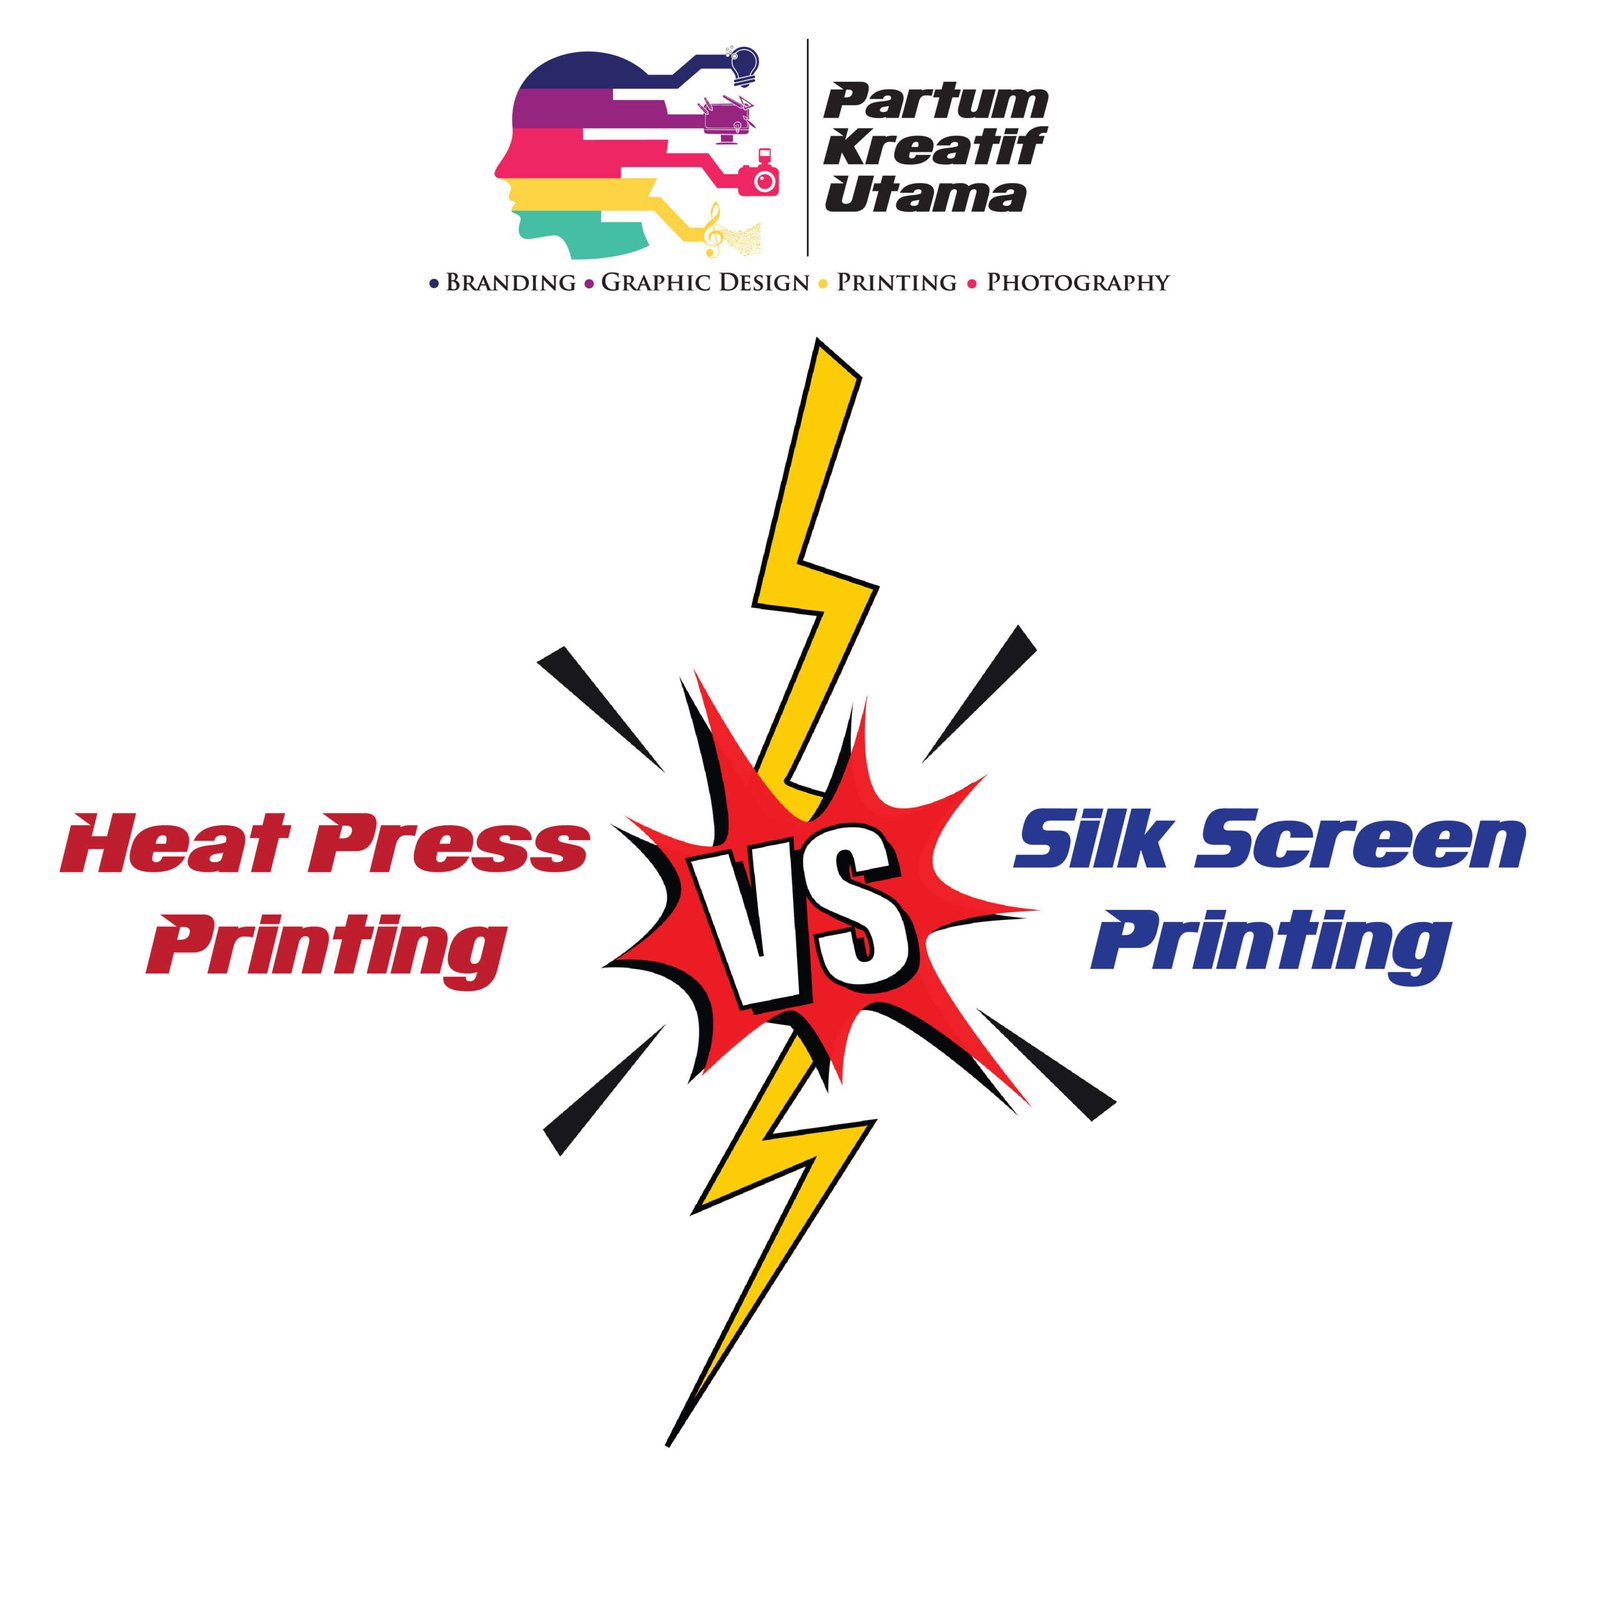 silkscreen vs screen print